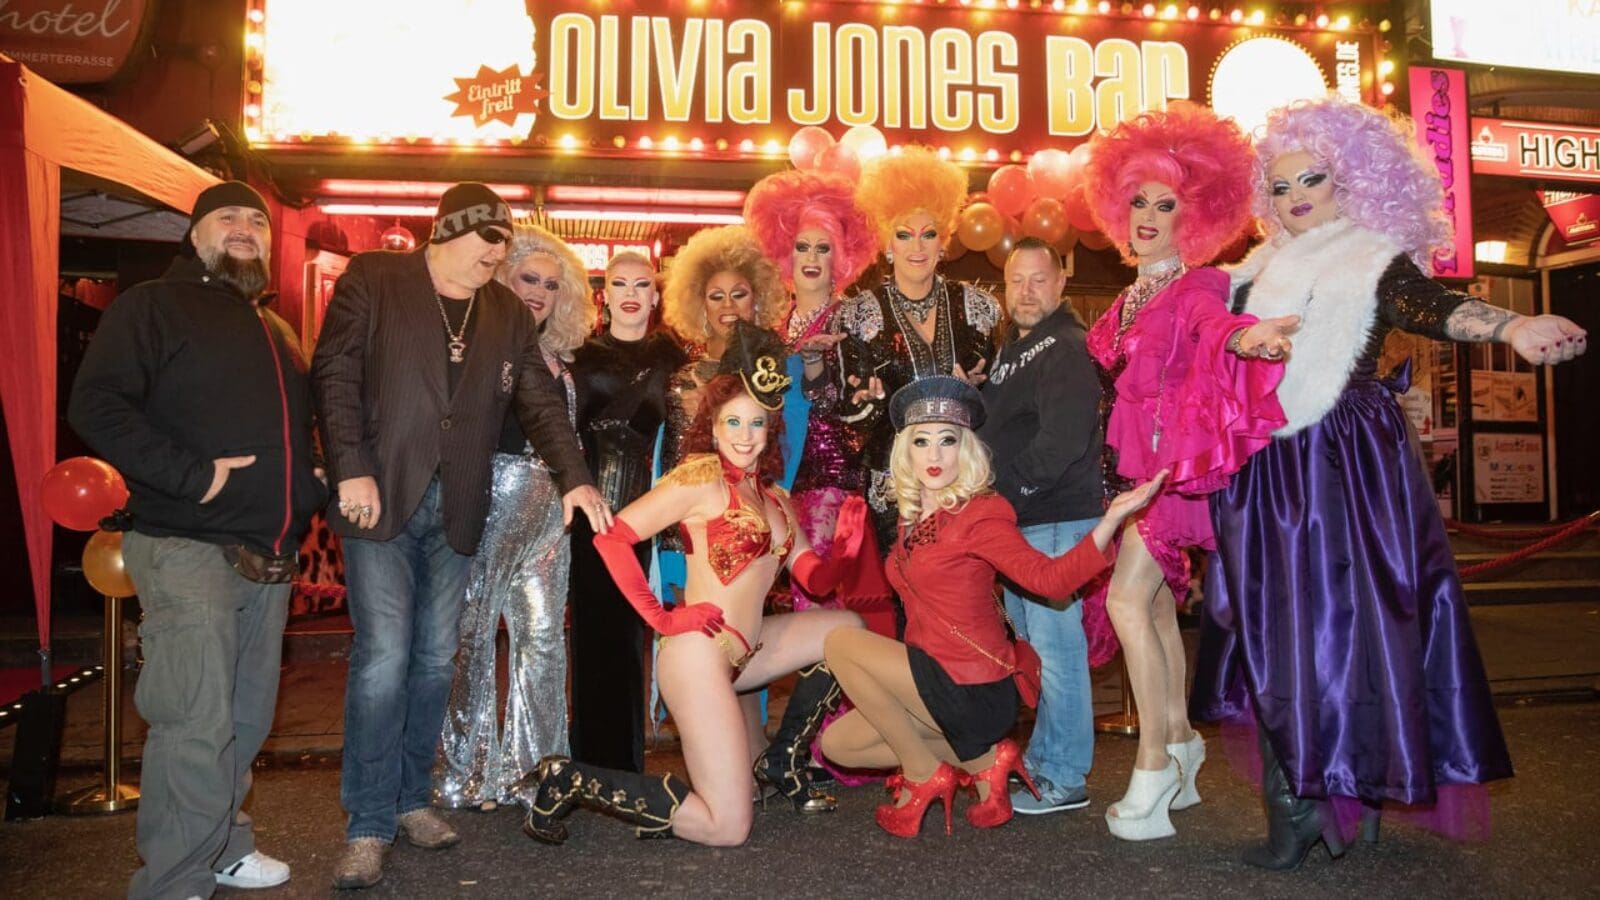 Olivia Jones Bar feiert Jubiläum